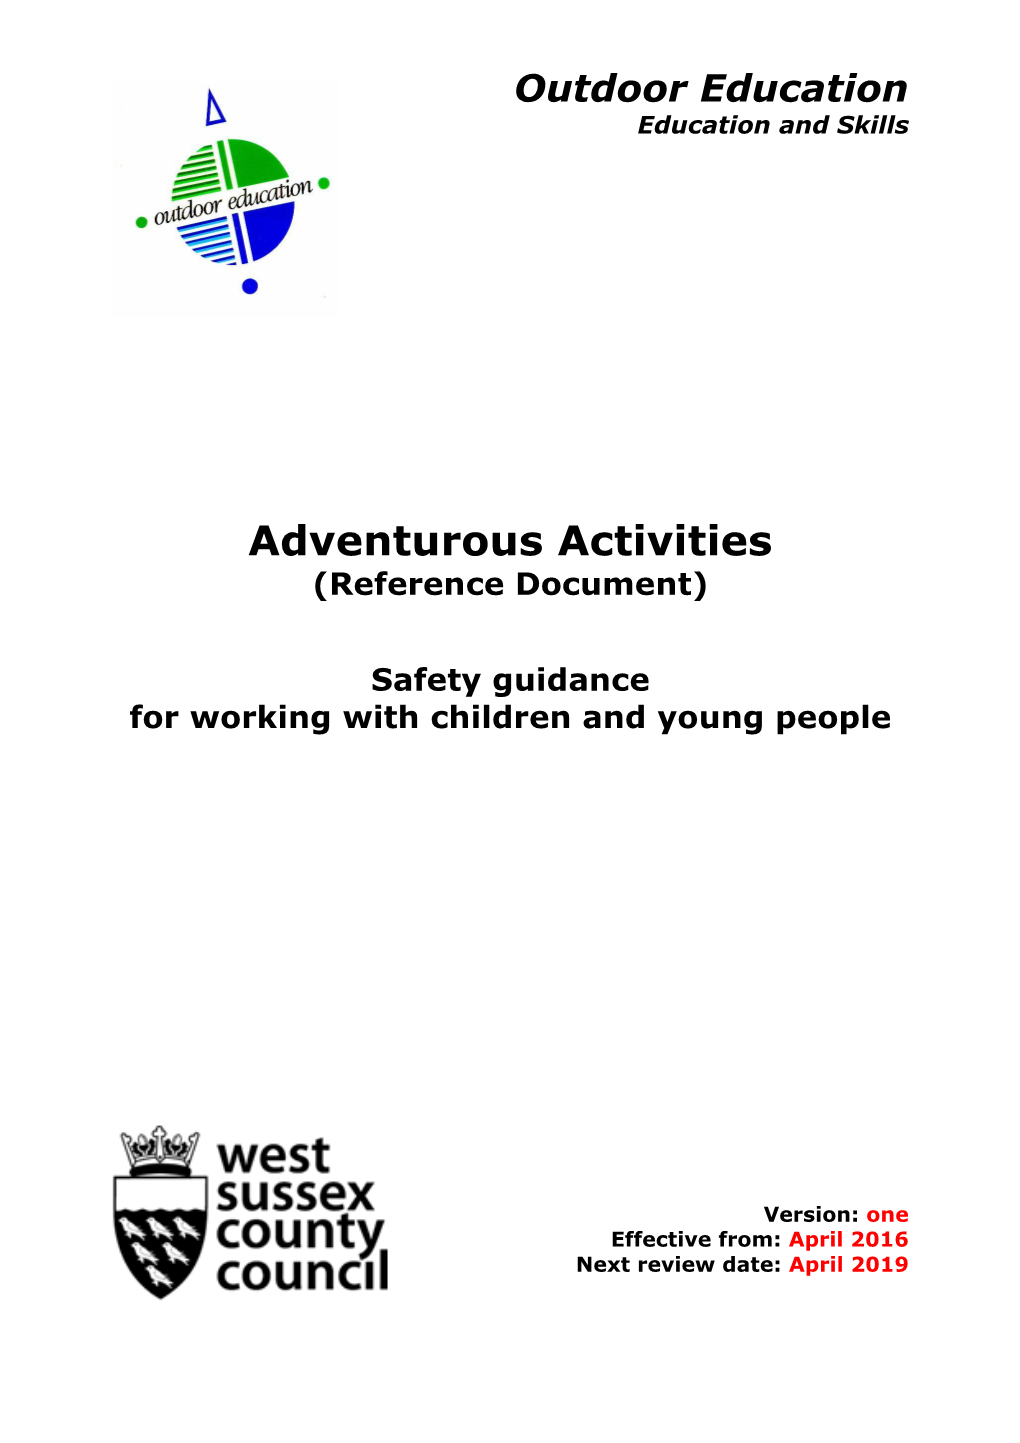 Adventurous Activities (Reference Document)